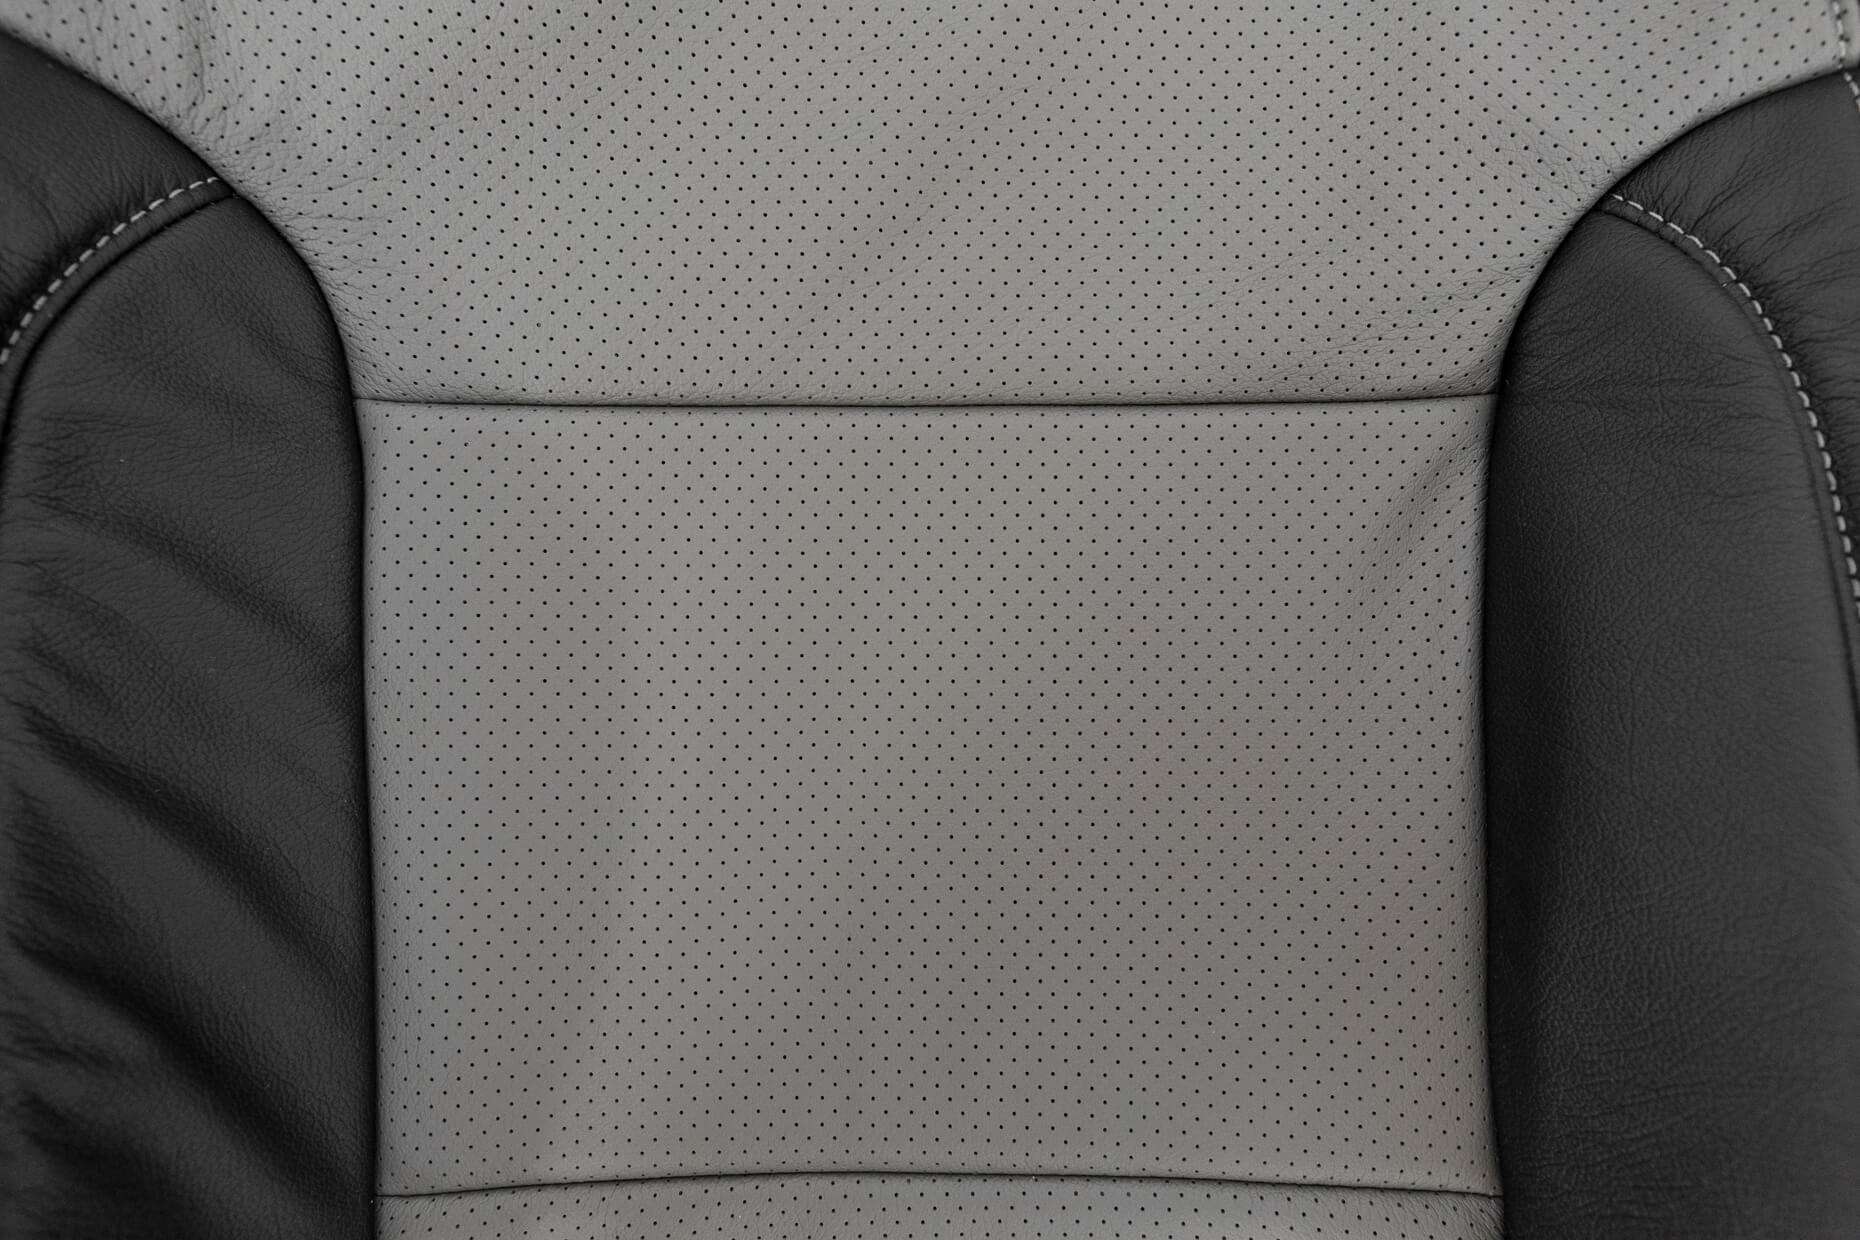 2014-2018 Chevrolet Silverado Leather Kit - Black & Light Grey - Backrest insert close-up